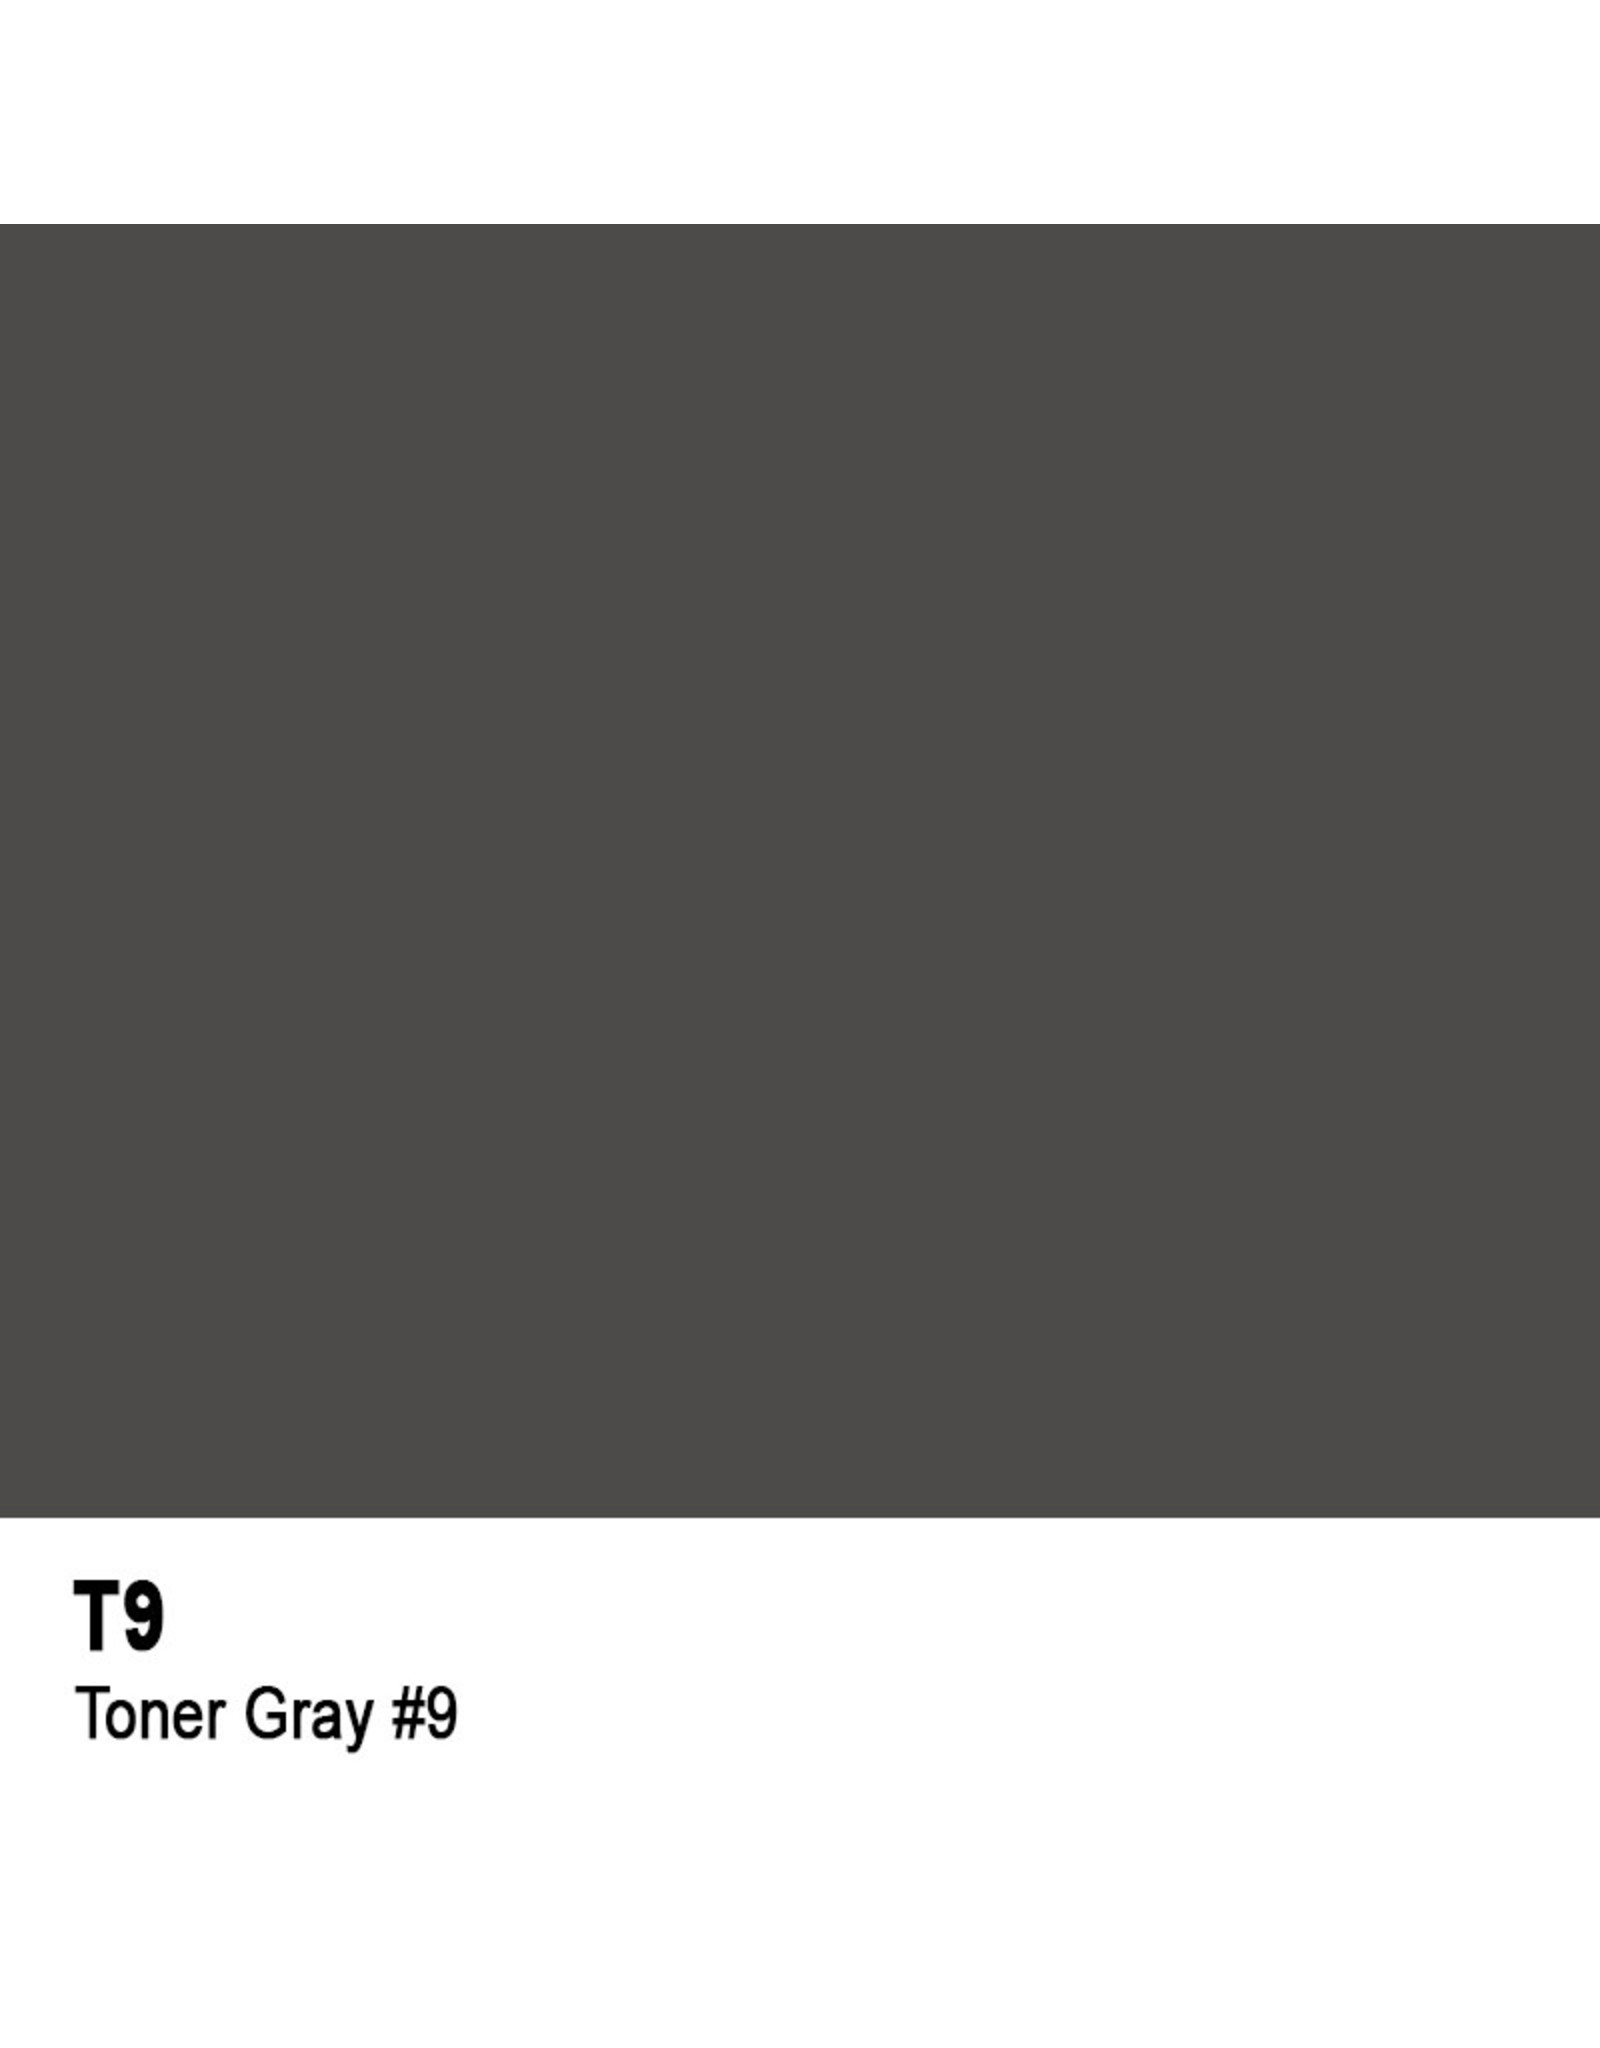 COPIC COPIC T9 TONER GRAY #9 SKETCH MARKER